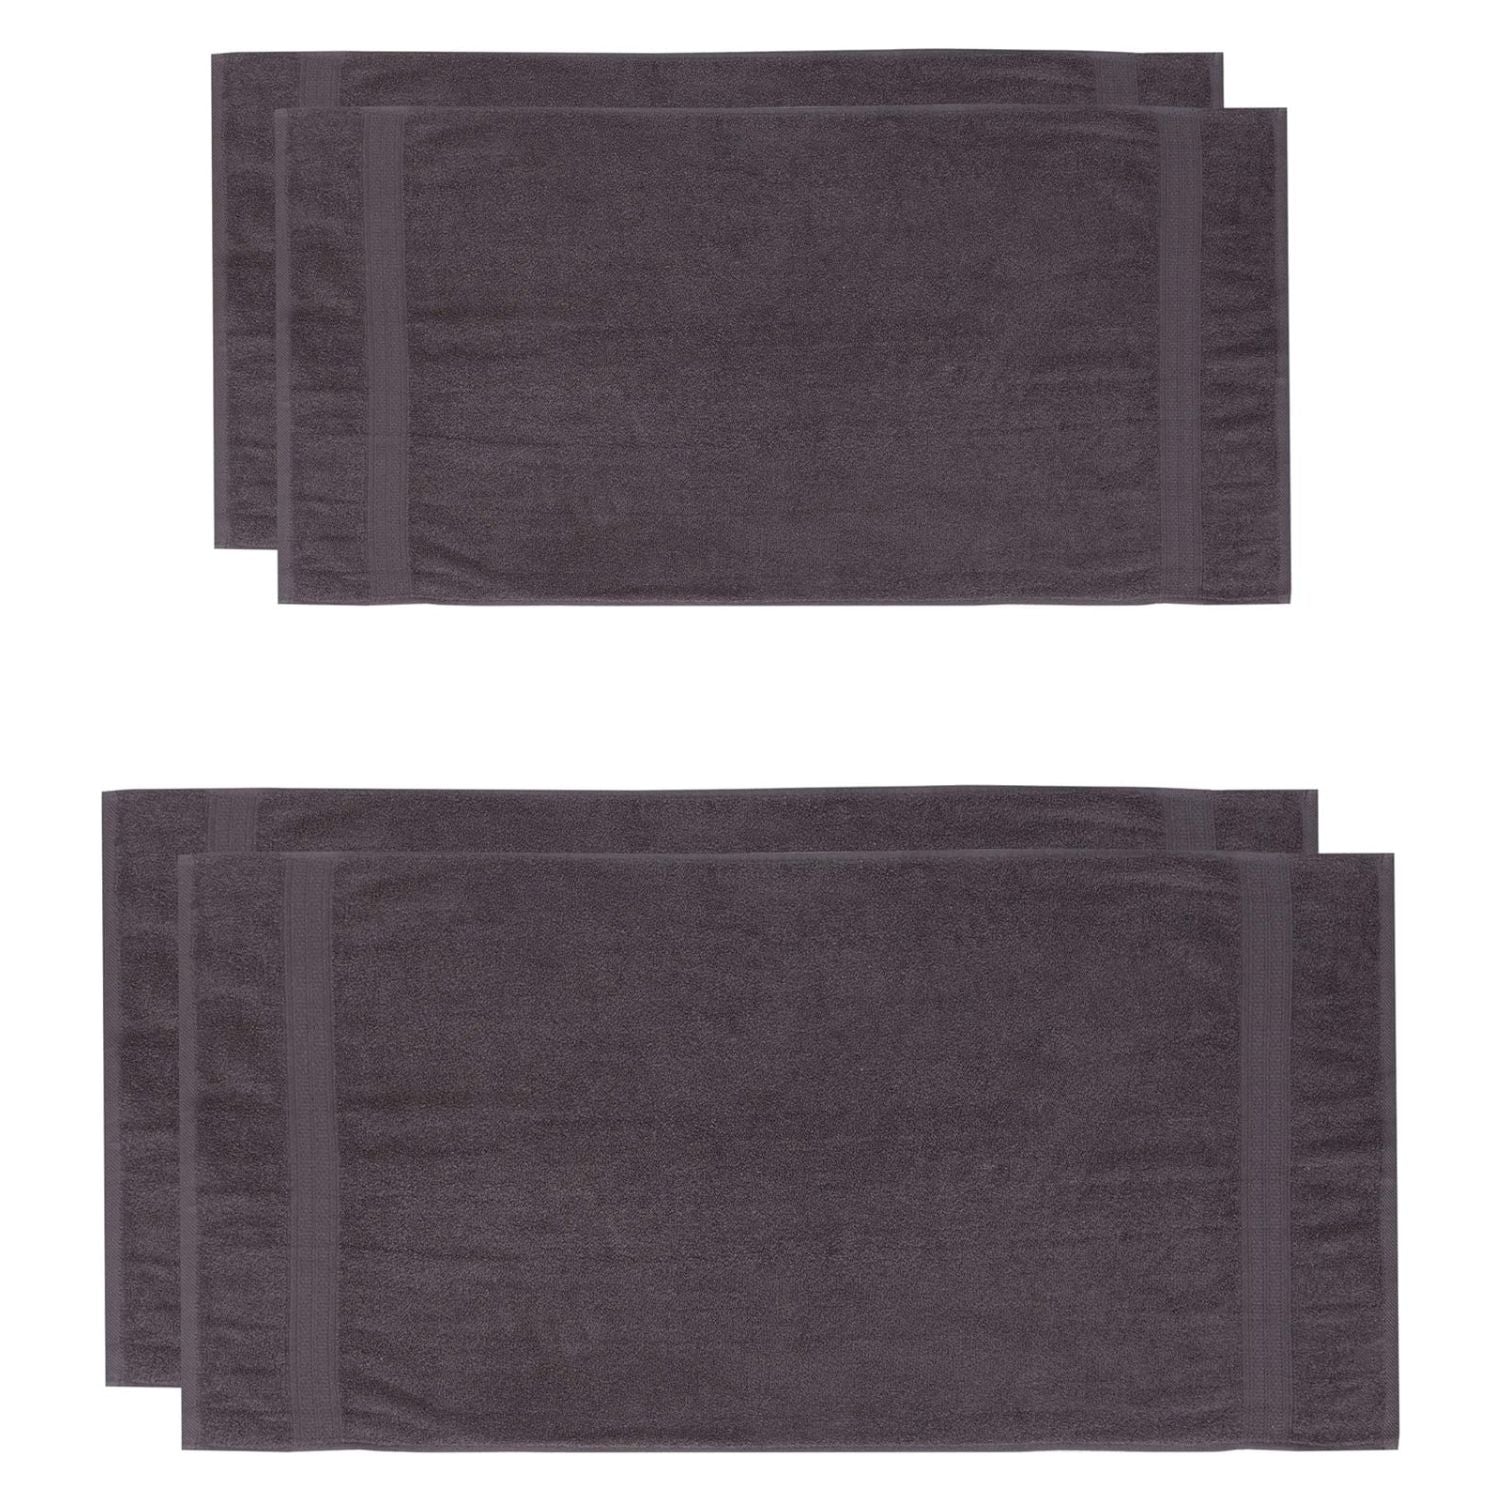 Premium Handtuch-Set - 2 Handtücher (50 x 100 cm) + 2 Badetücher (70 x 140 cm) - Anthrazit